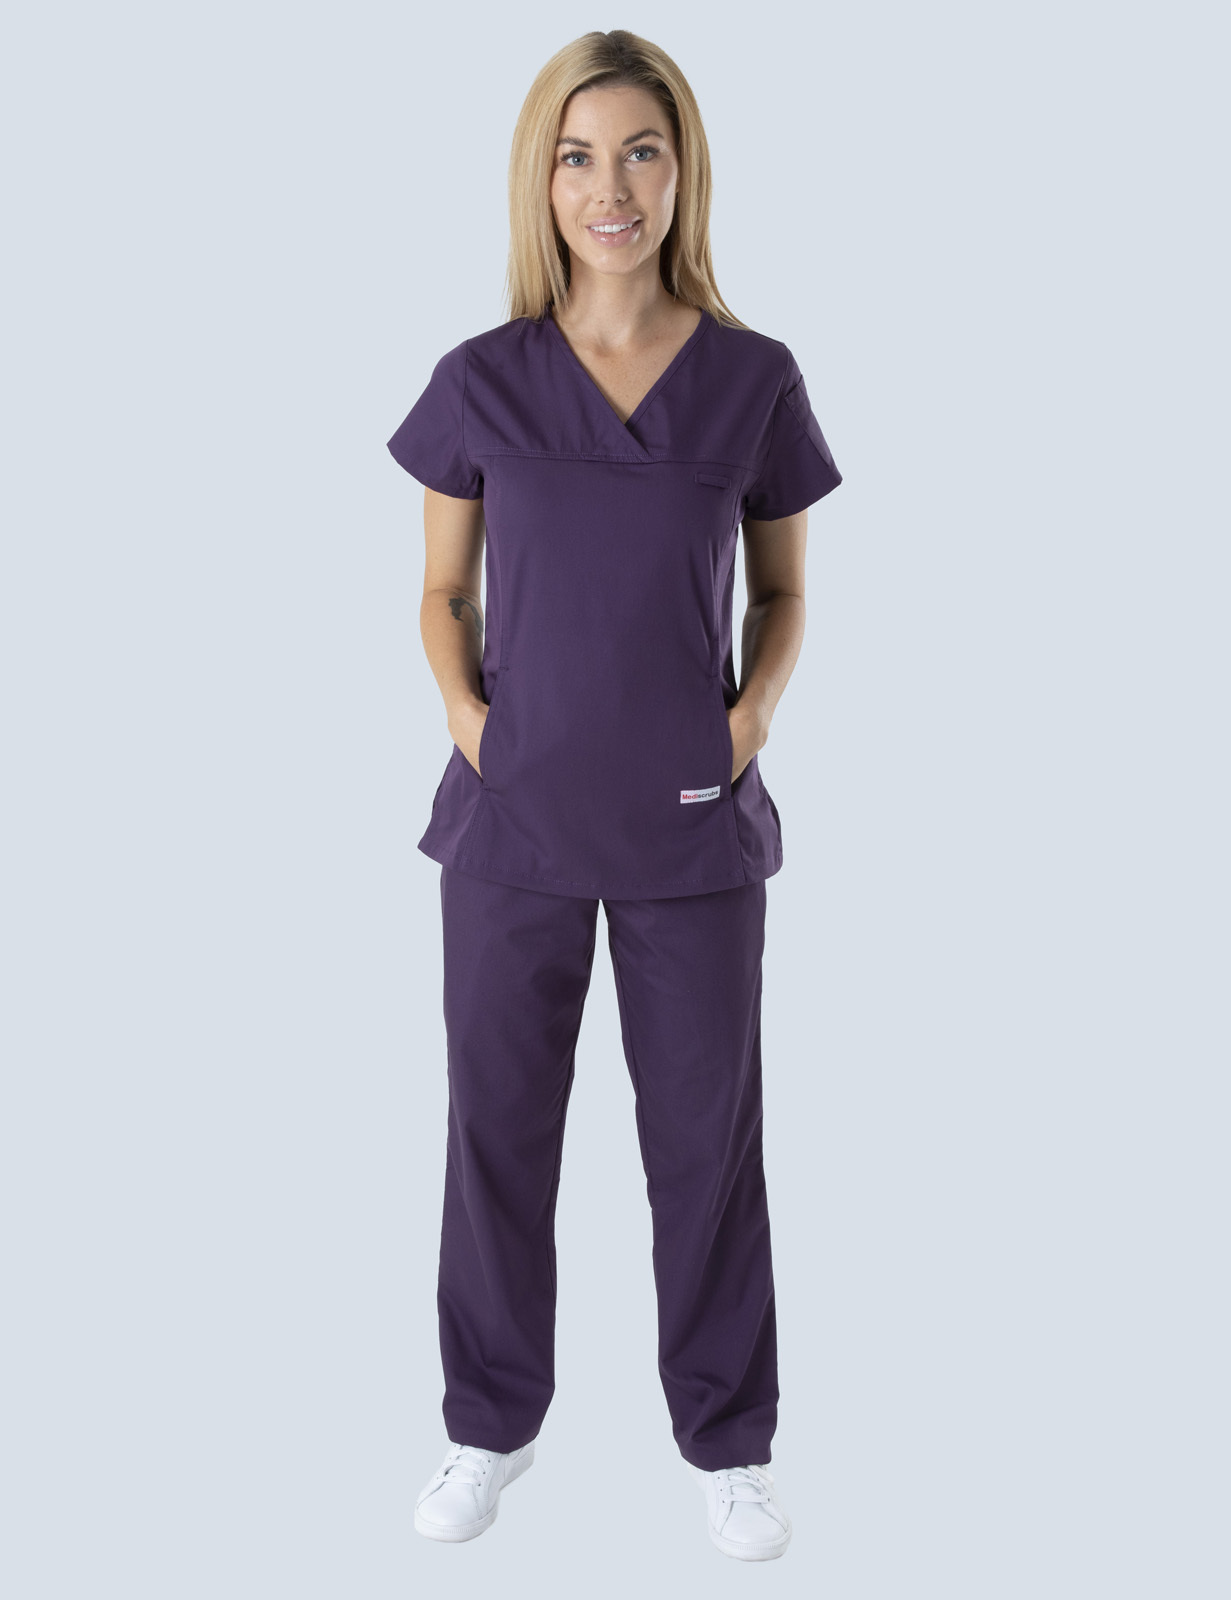 Logan Hospital Birthing Suite Uniform Set Bundle (Women's Fit Solid Top and Cargo Pants in Aubergine incl Logo)